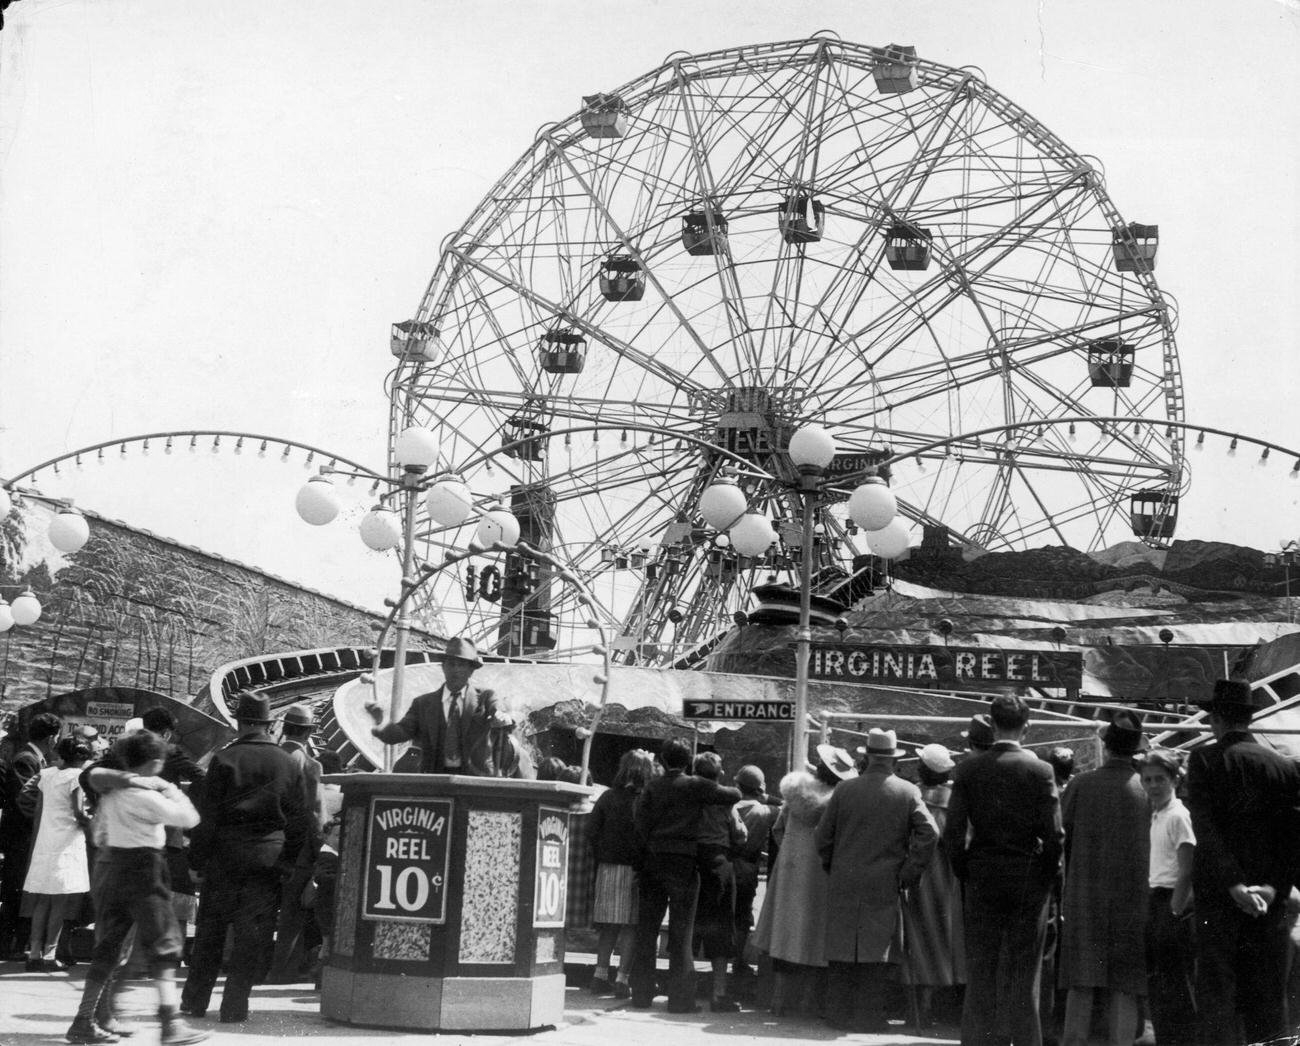 Crowds Watch Wonder Wheel And Virginia Reel Rides, Coney Island